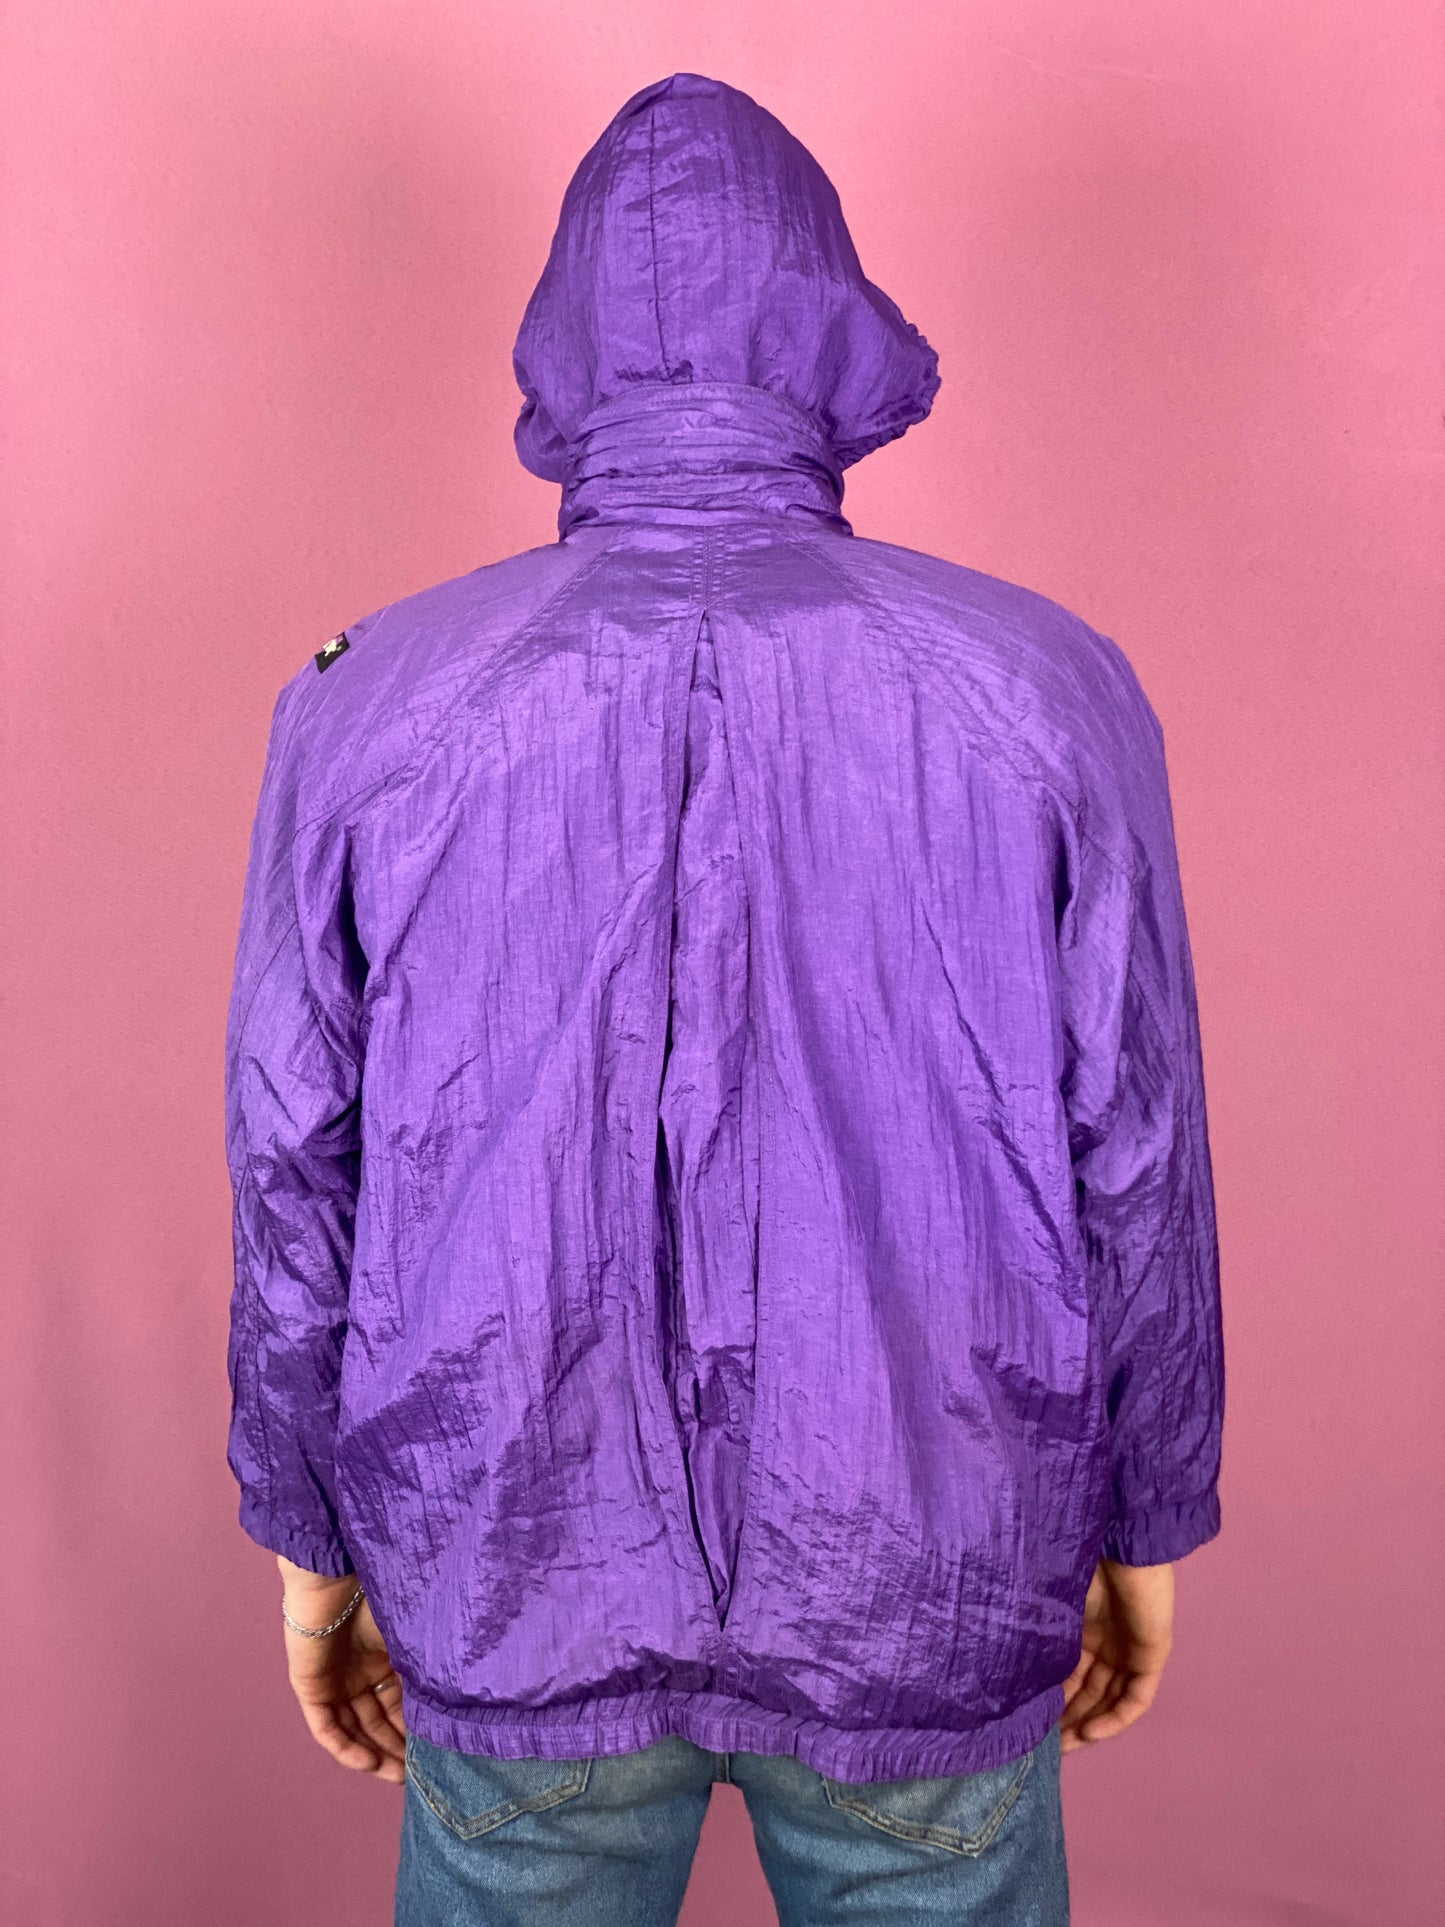 90s Vintage Men's Ski Jacket with Lining - XS Purple Nylon